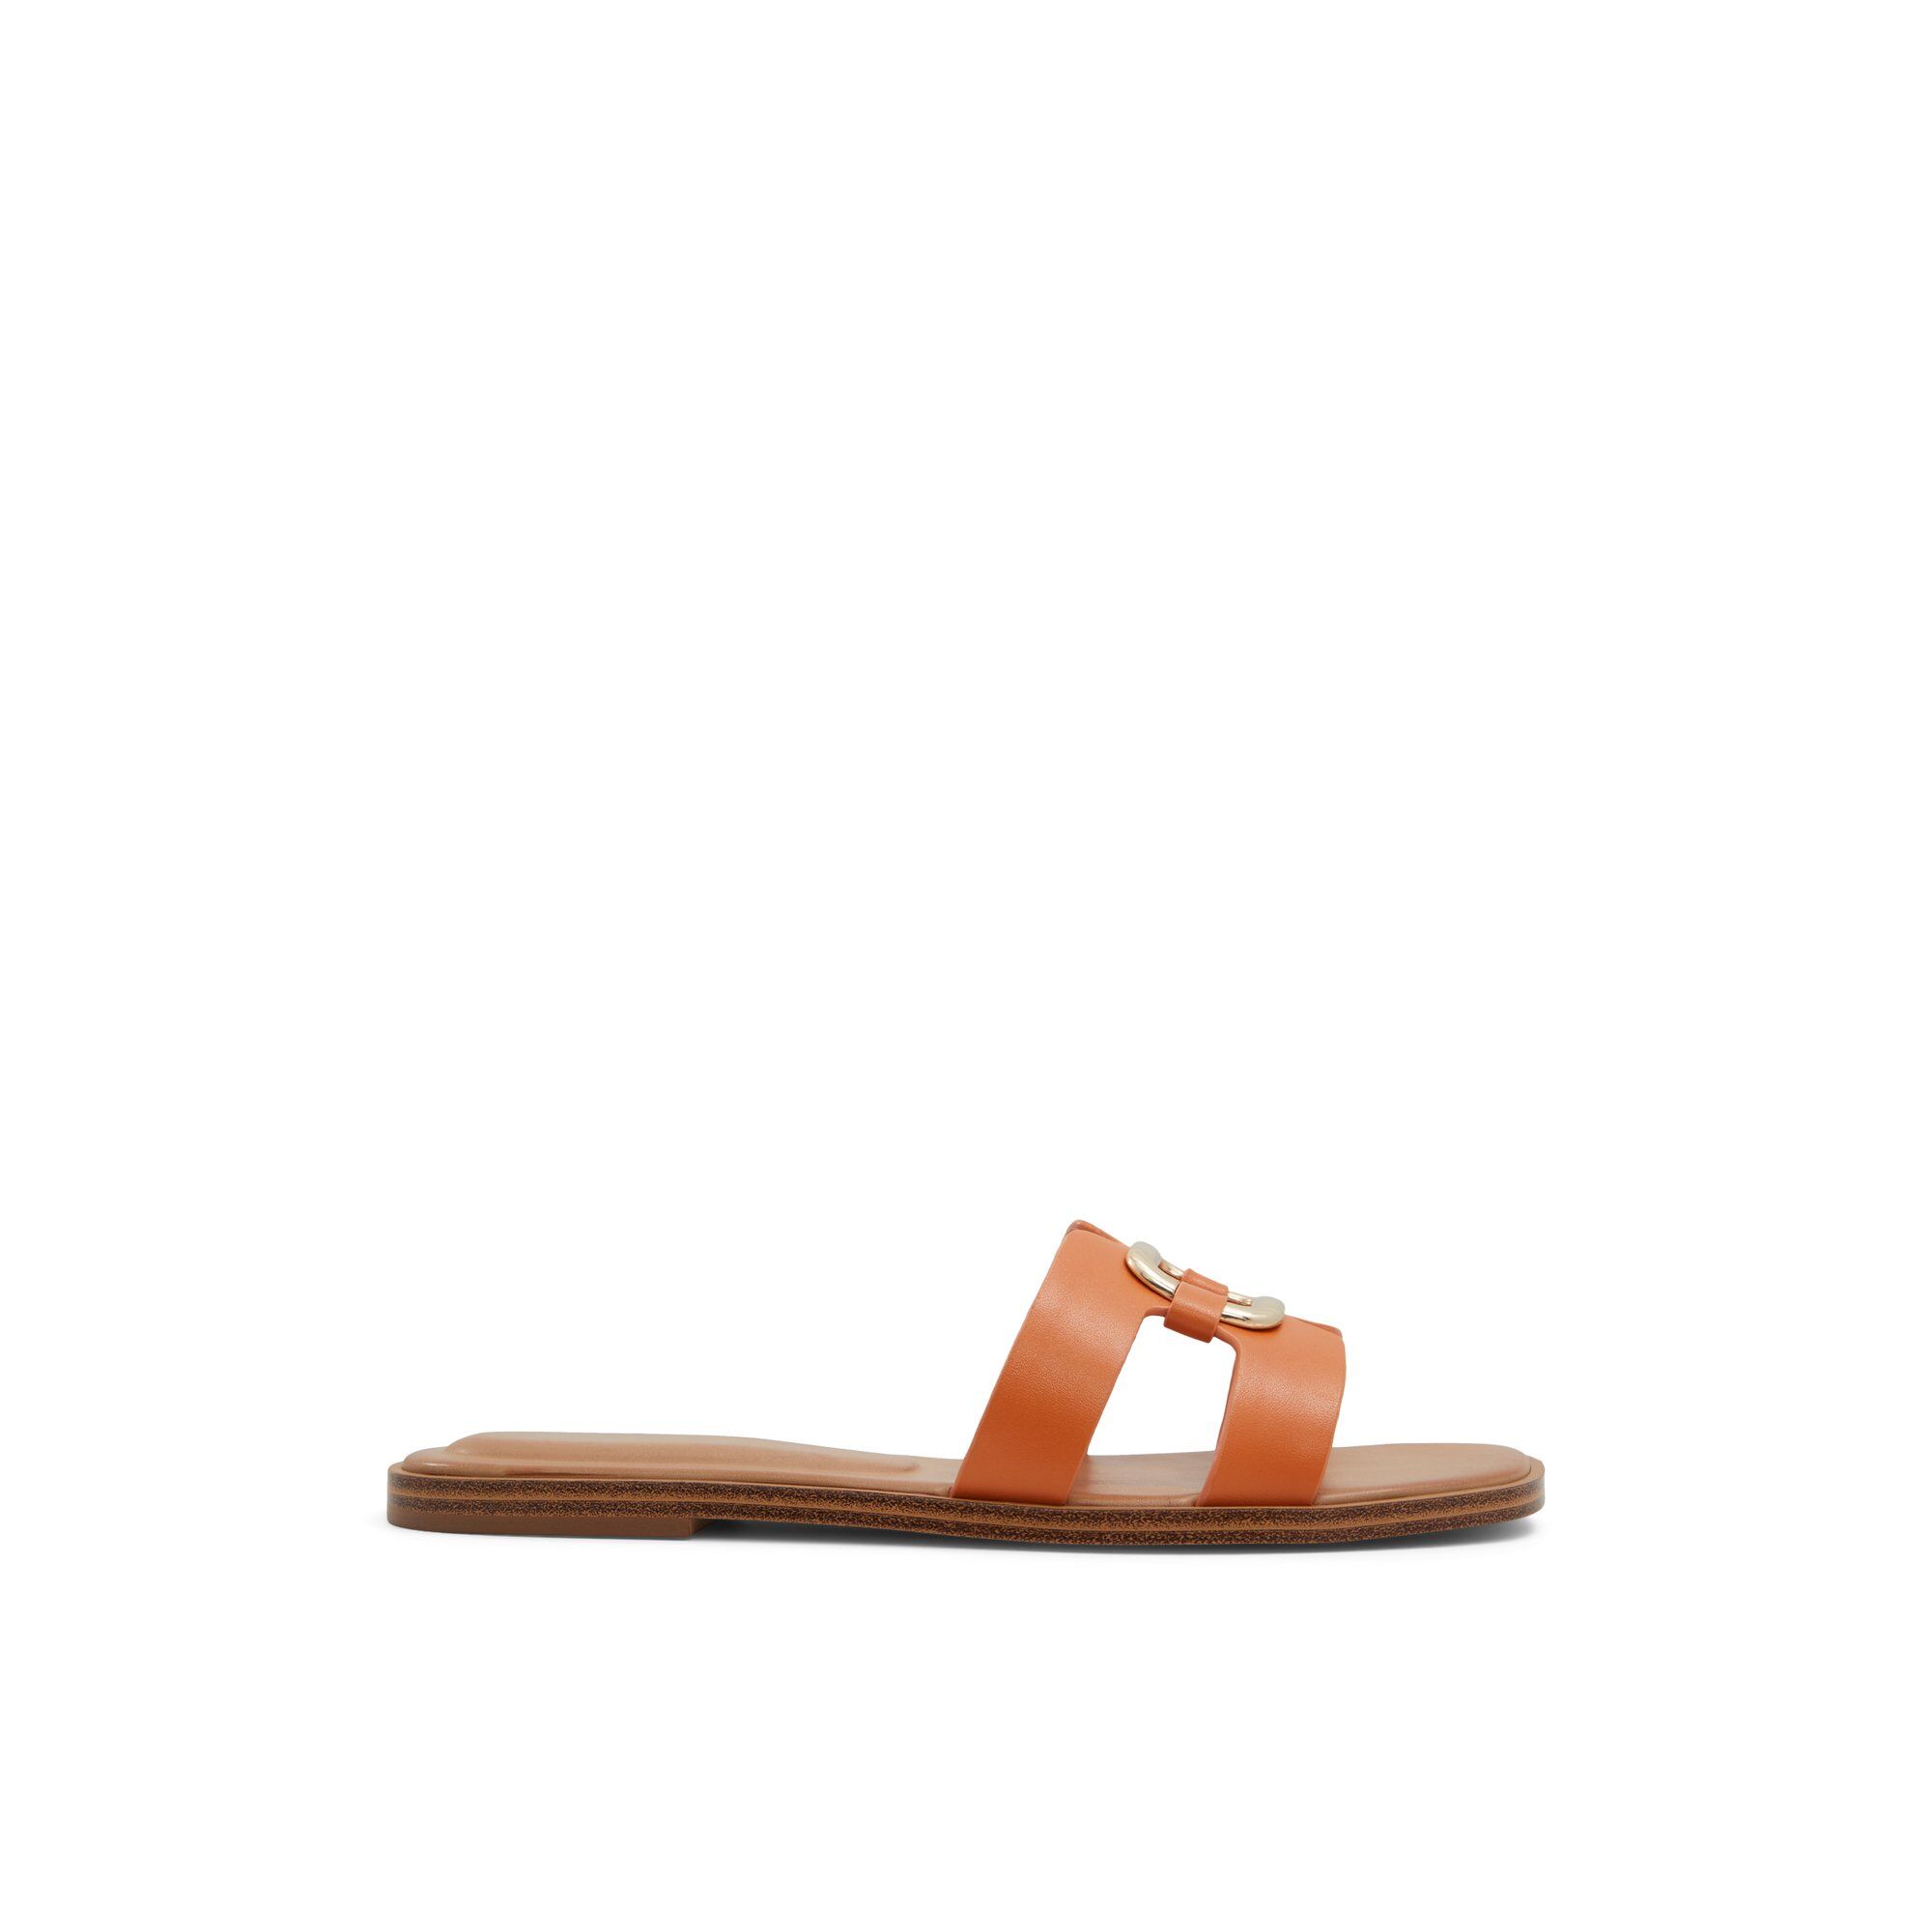 ALDO Nydaokin - Women's Flat Sandals - Orange, Size 7